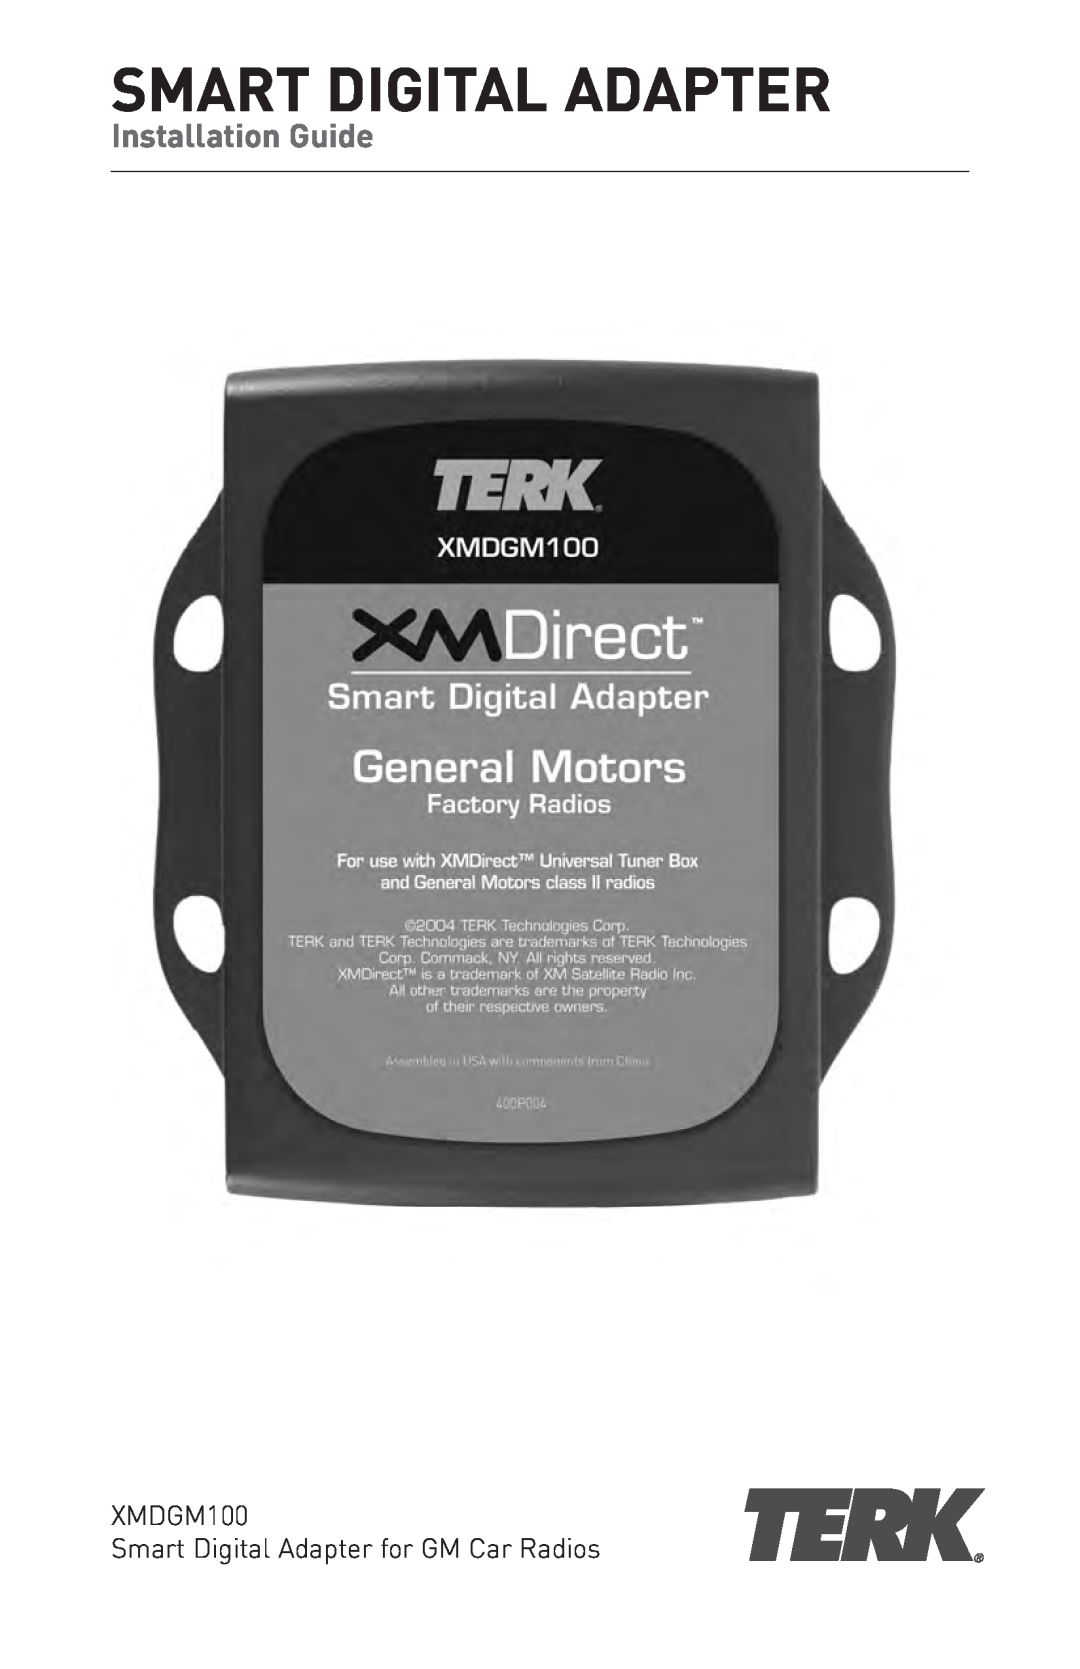 TERK Technologies XMDGM100 manual Smart Digital Adapter, Installation Guide 